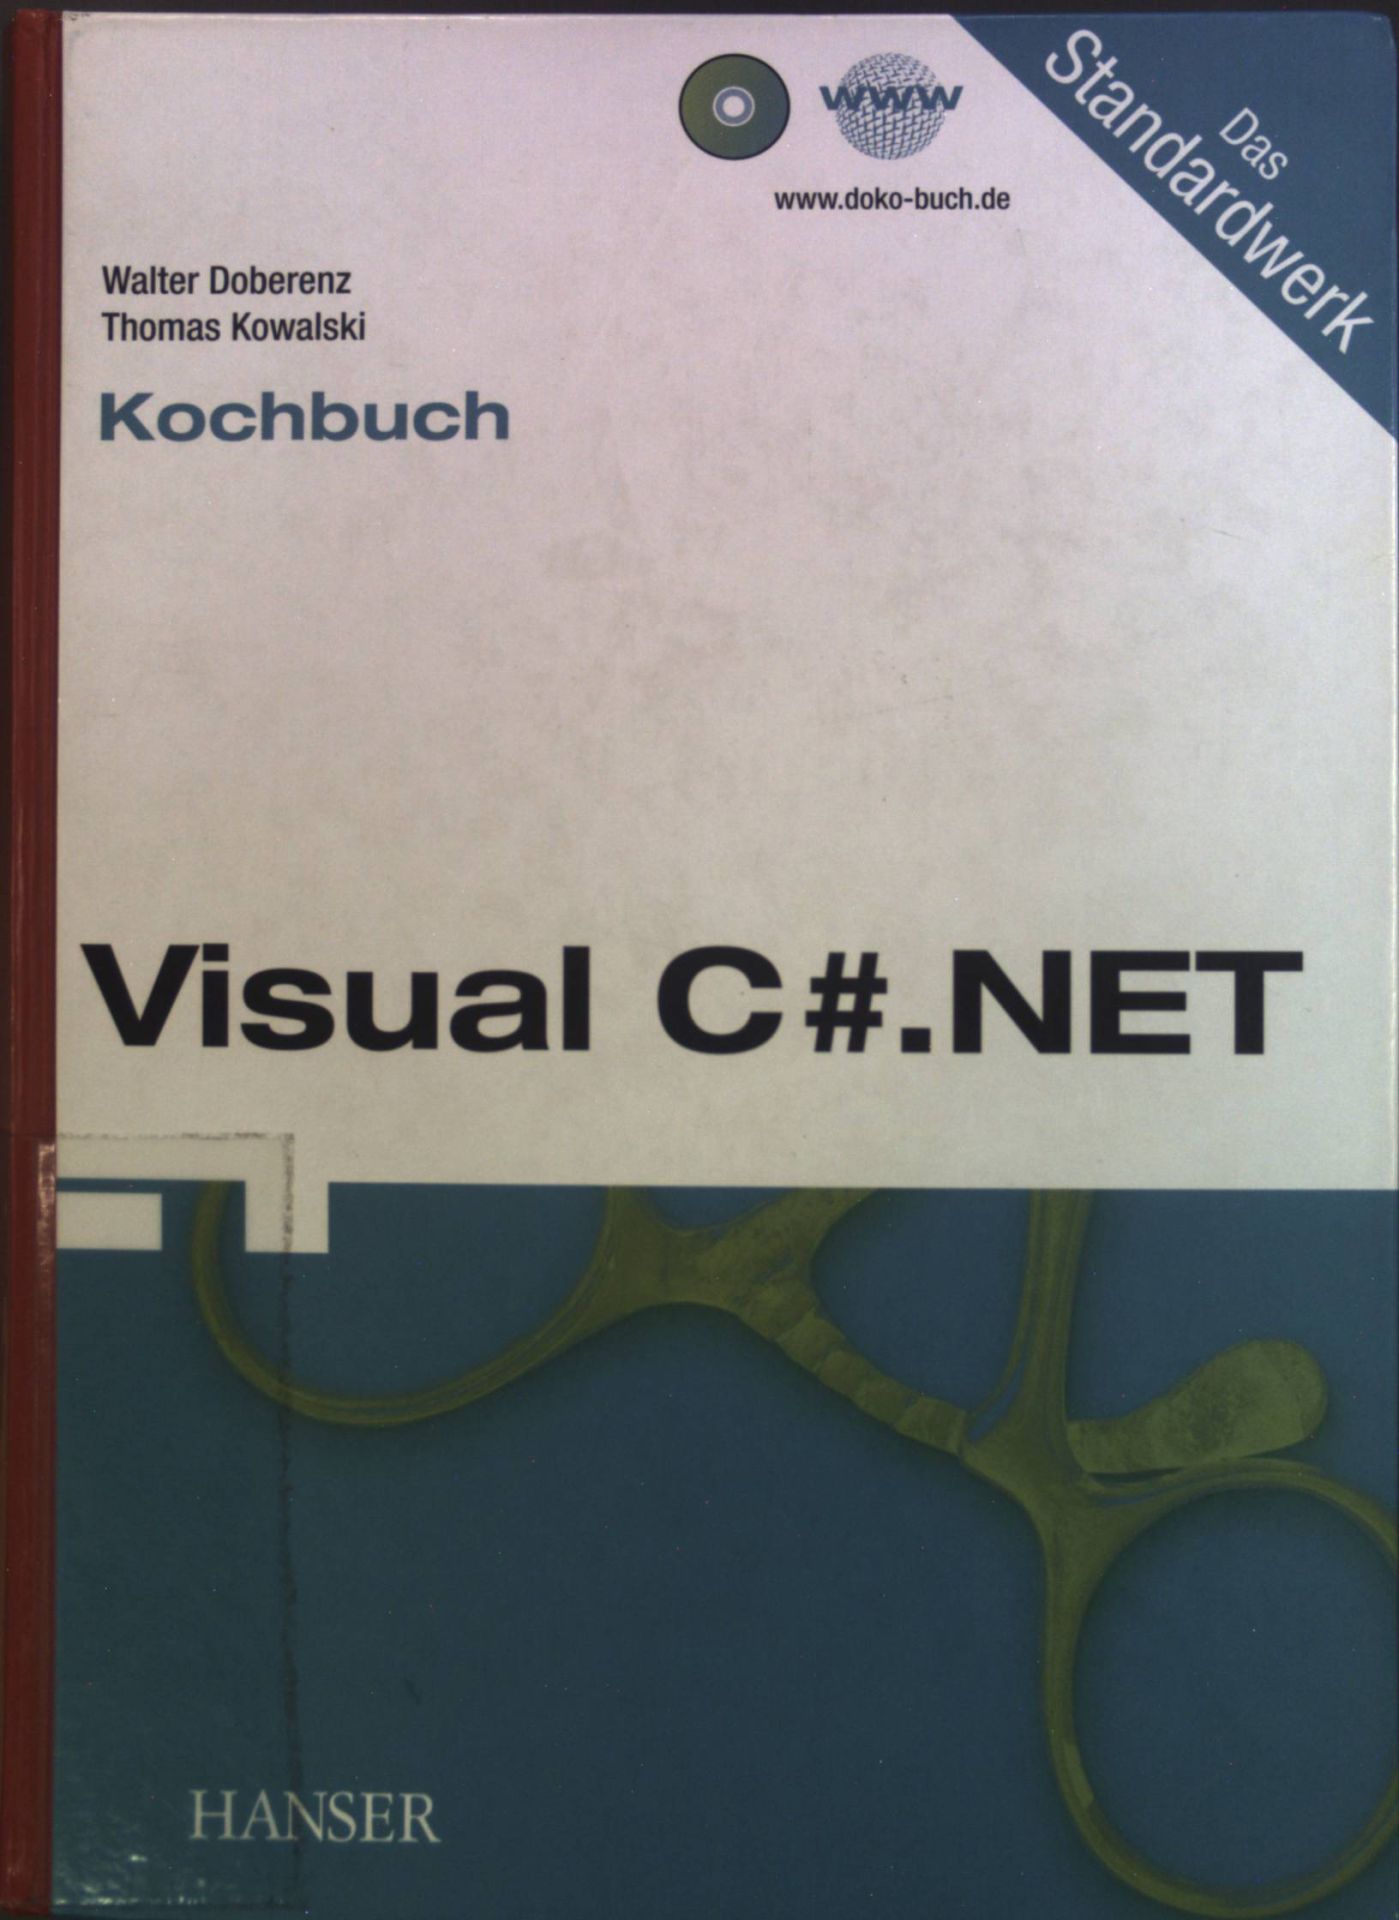 Visual-C#.NET-Kochbuch. Das Standardwerk - Doberenz, Walter und Thomas Kowalski